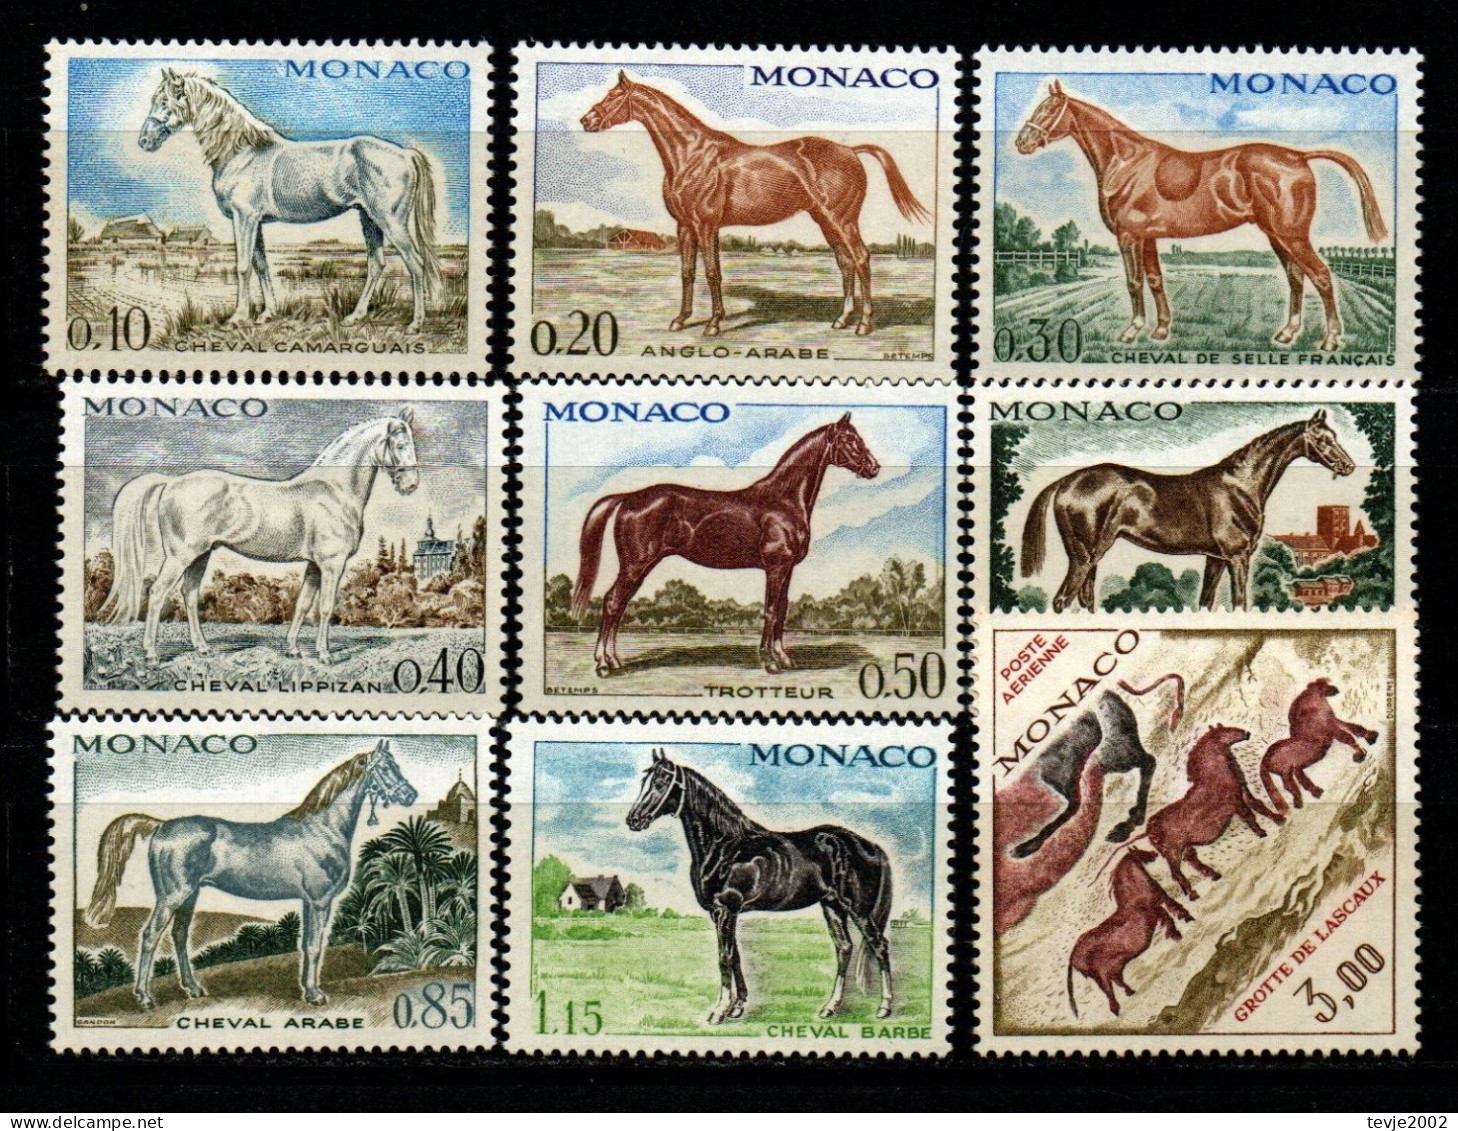 Monaco 1970 - Mi.Nr. 980 - 988 - Postfrisch MNH - Tiere Animals Pferde Horses - Pferde